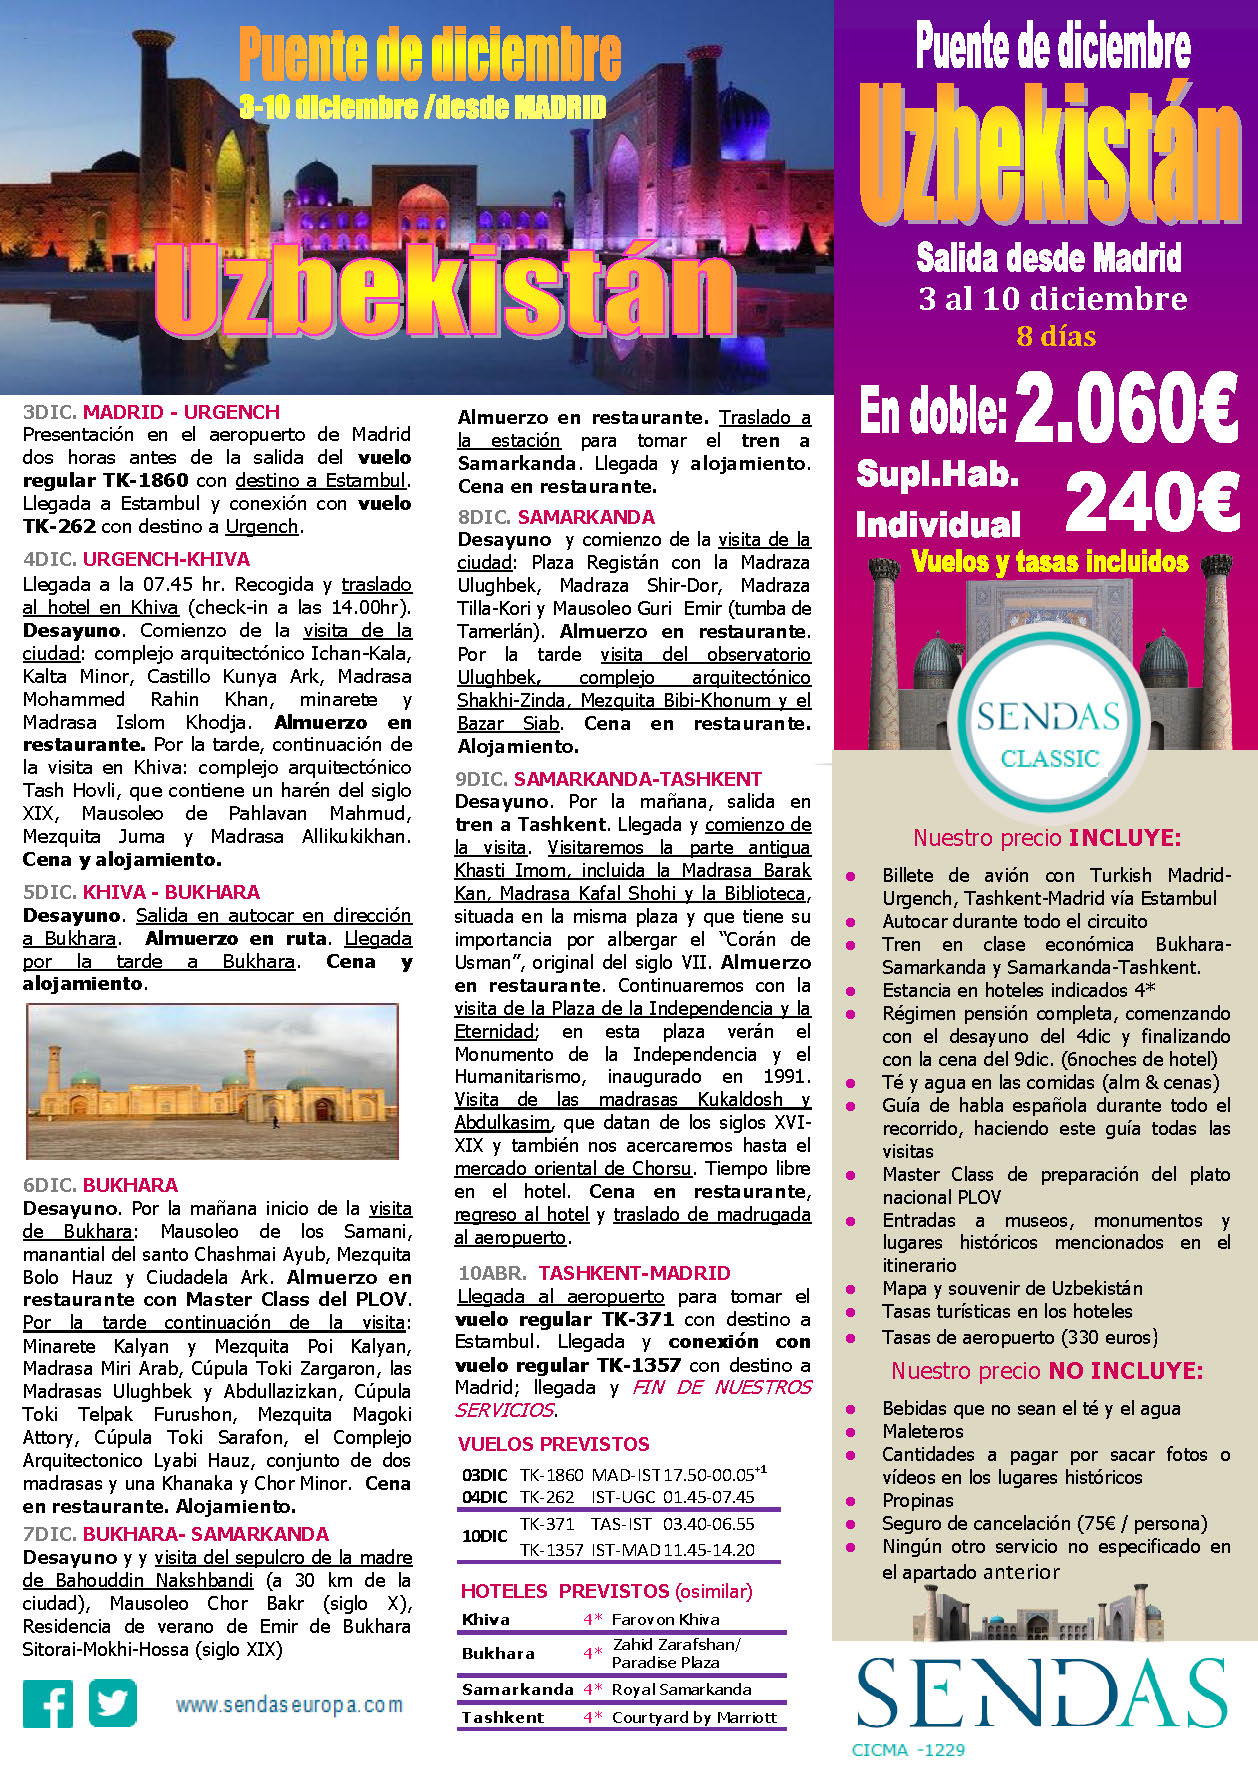 Ofertas Sendas Puente Diciembre 2023 circuito Uzbekistan 8 dias salida 3 Diciembre desde Madrid